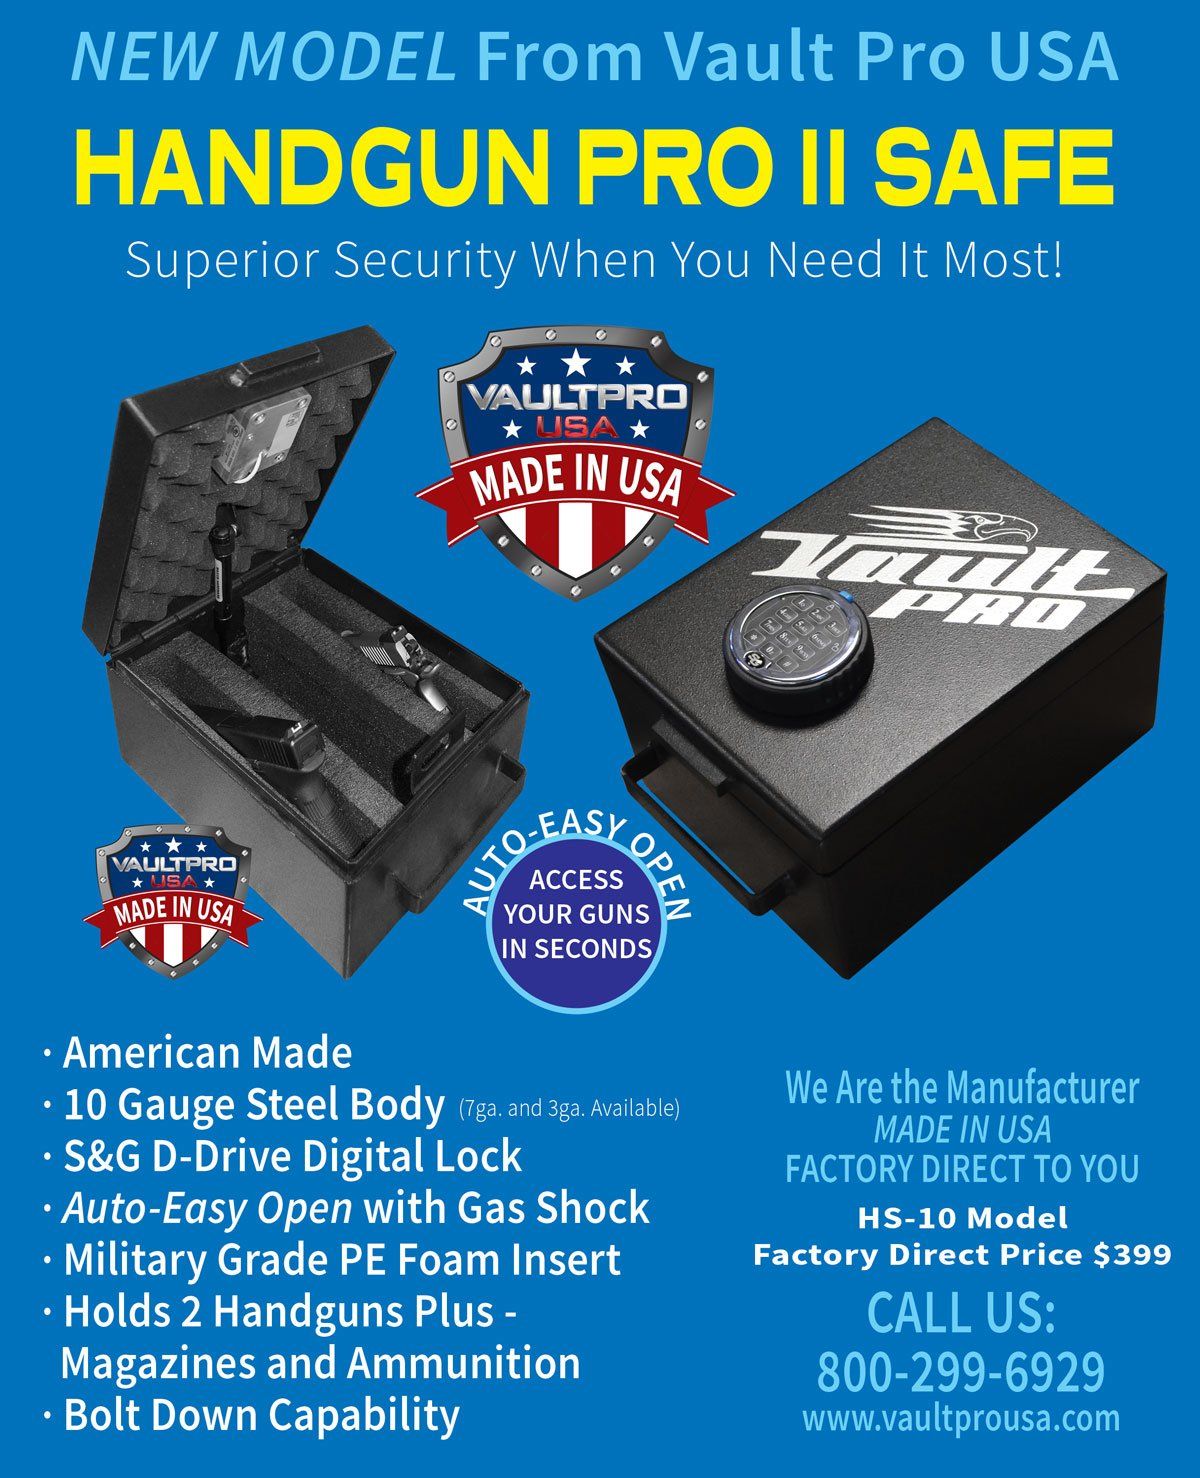 handgun safes made in USA on sale